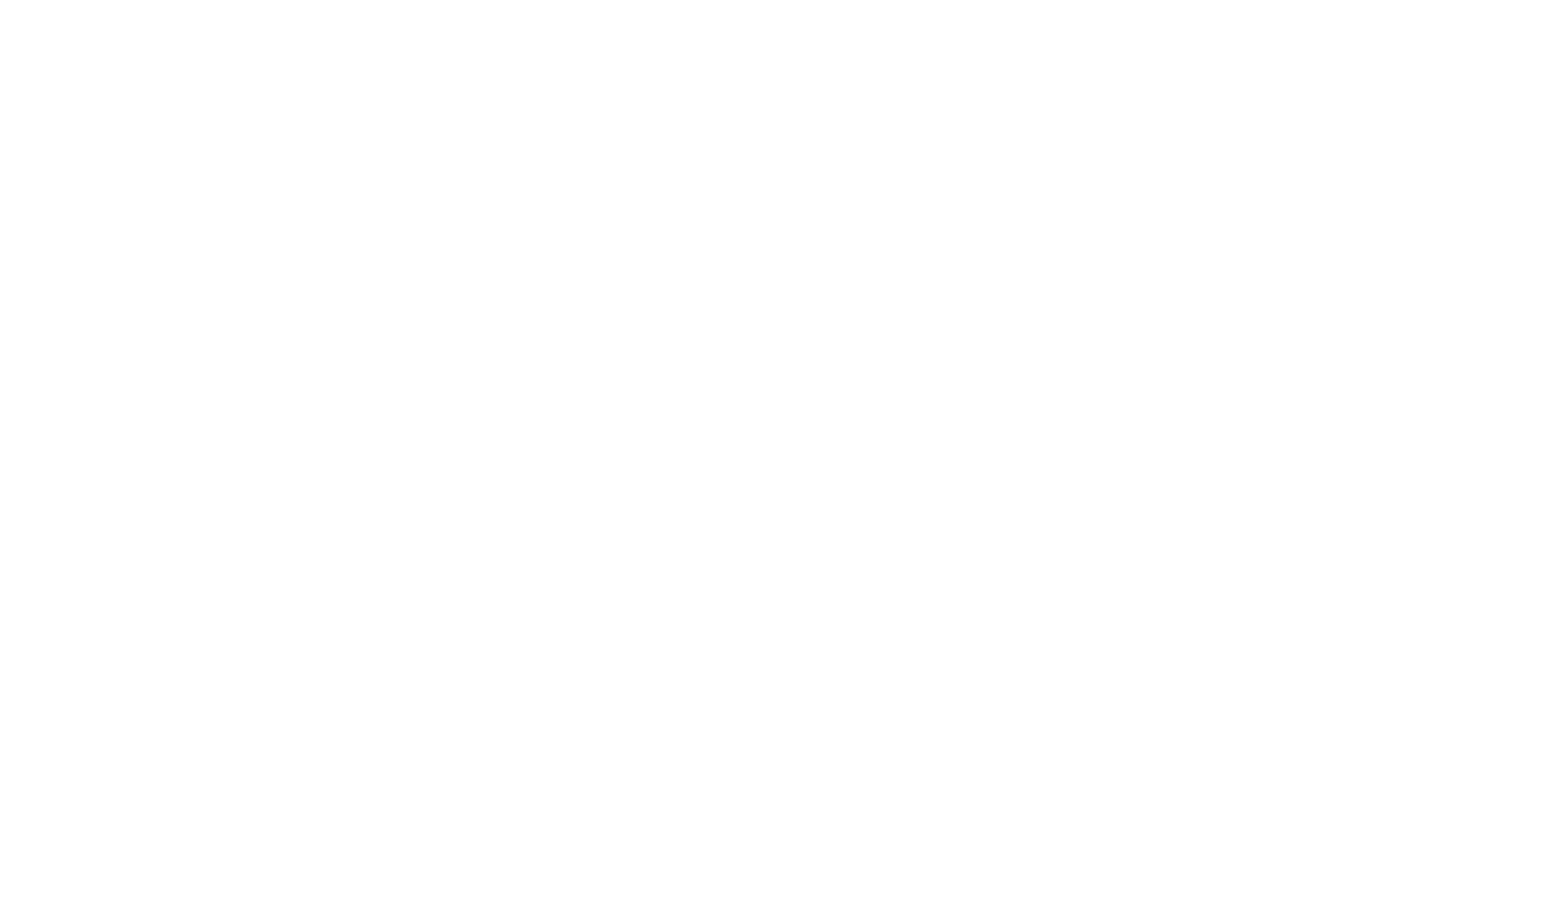 Agrana logo large for dark backgrounds (transparent PNG)